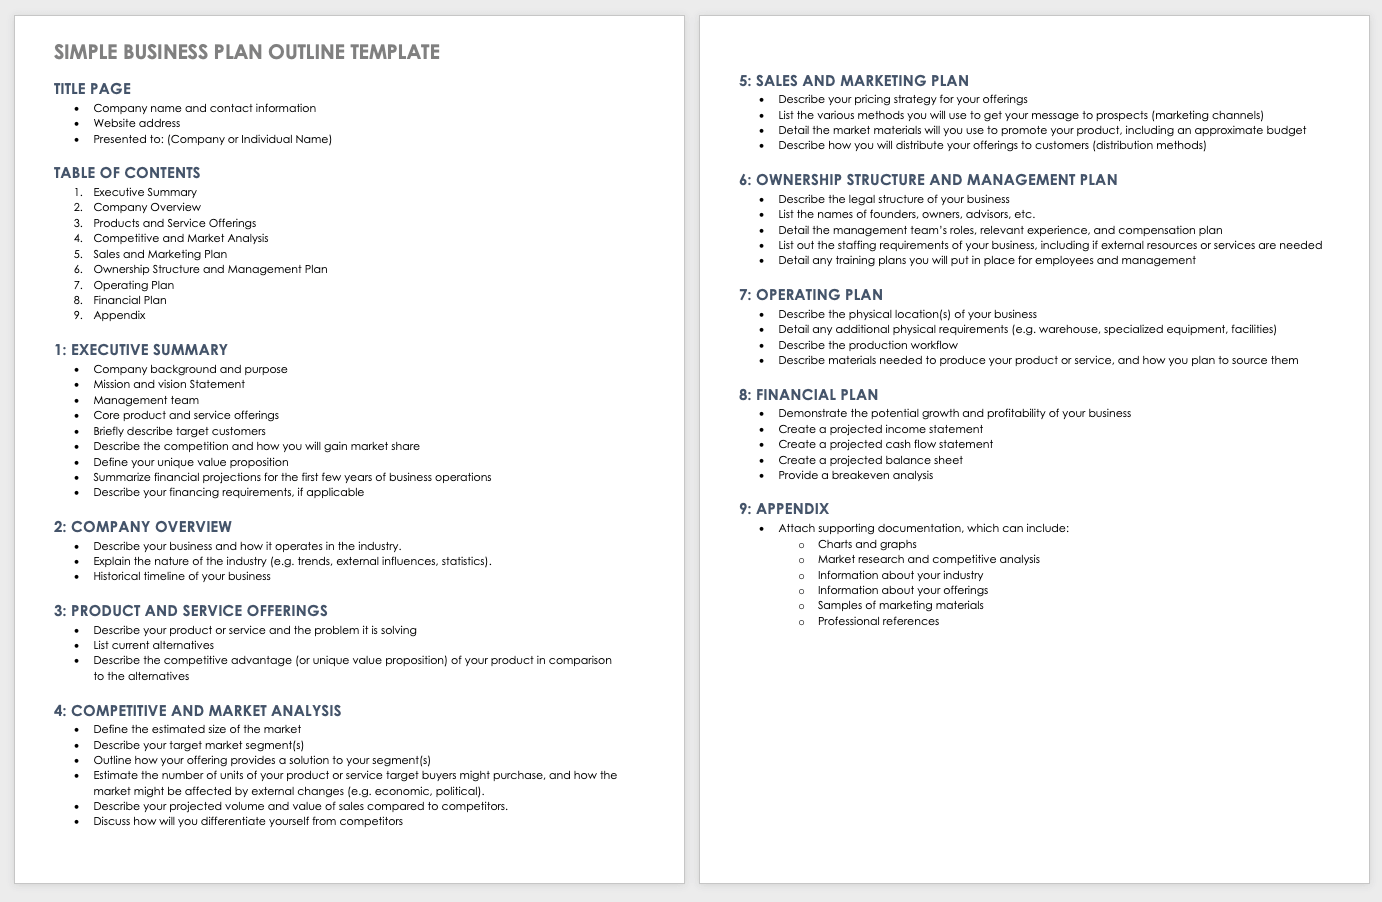 a simple business plan pdf